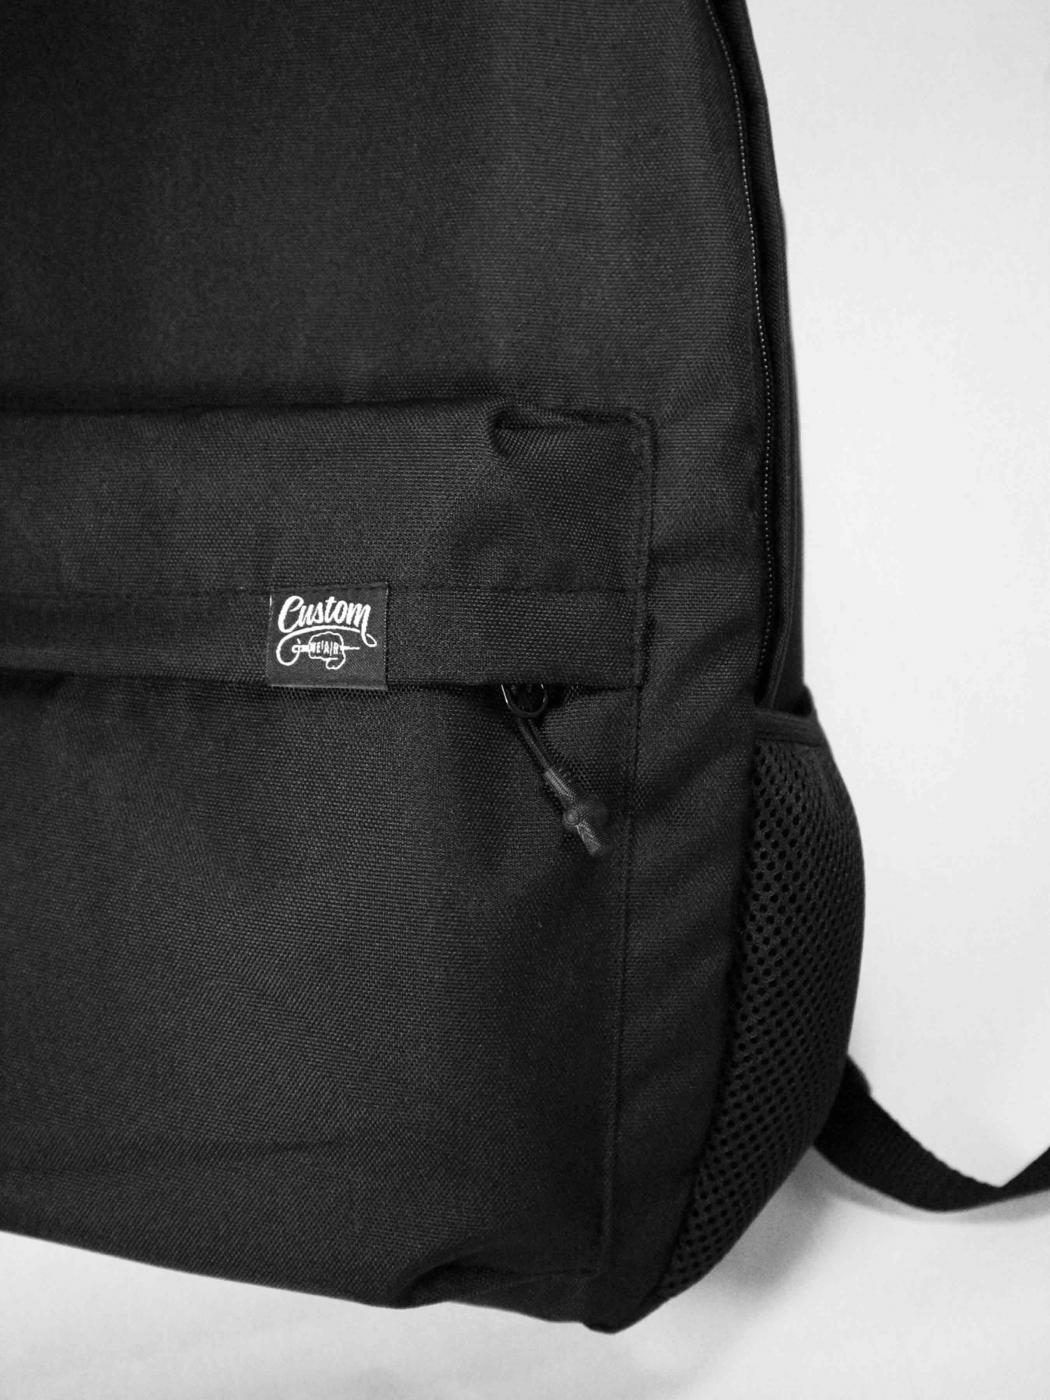 Рюкзак Custom Wear Duo 2.0 чорний Custom Wear - Фото 4